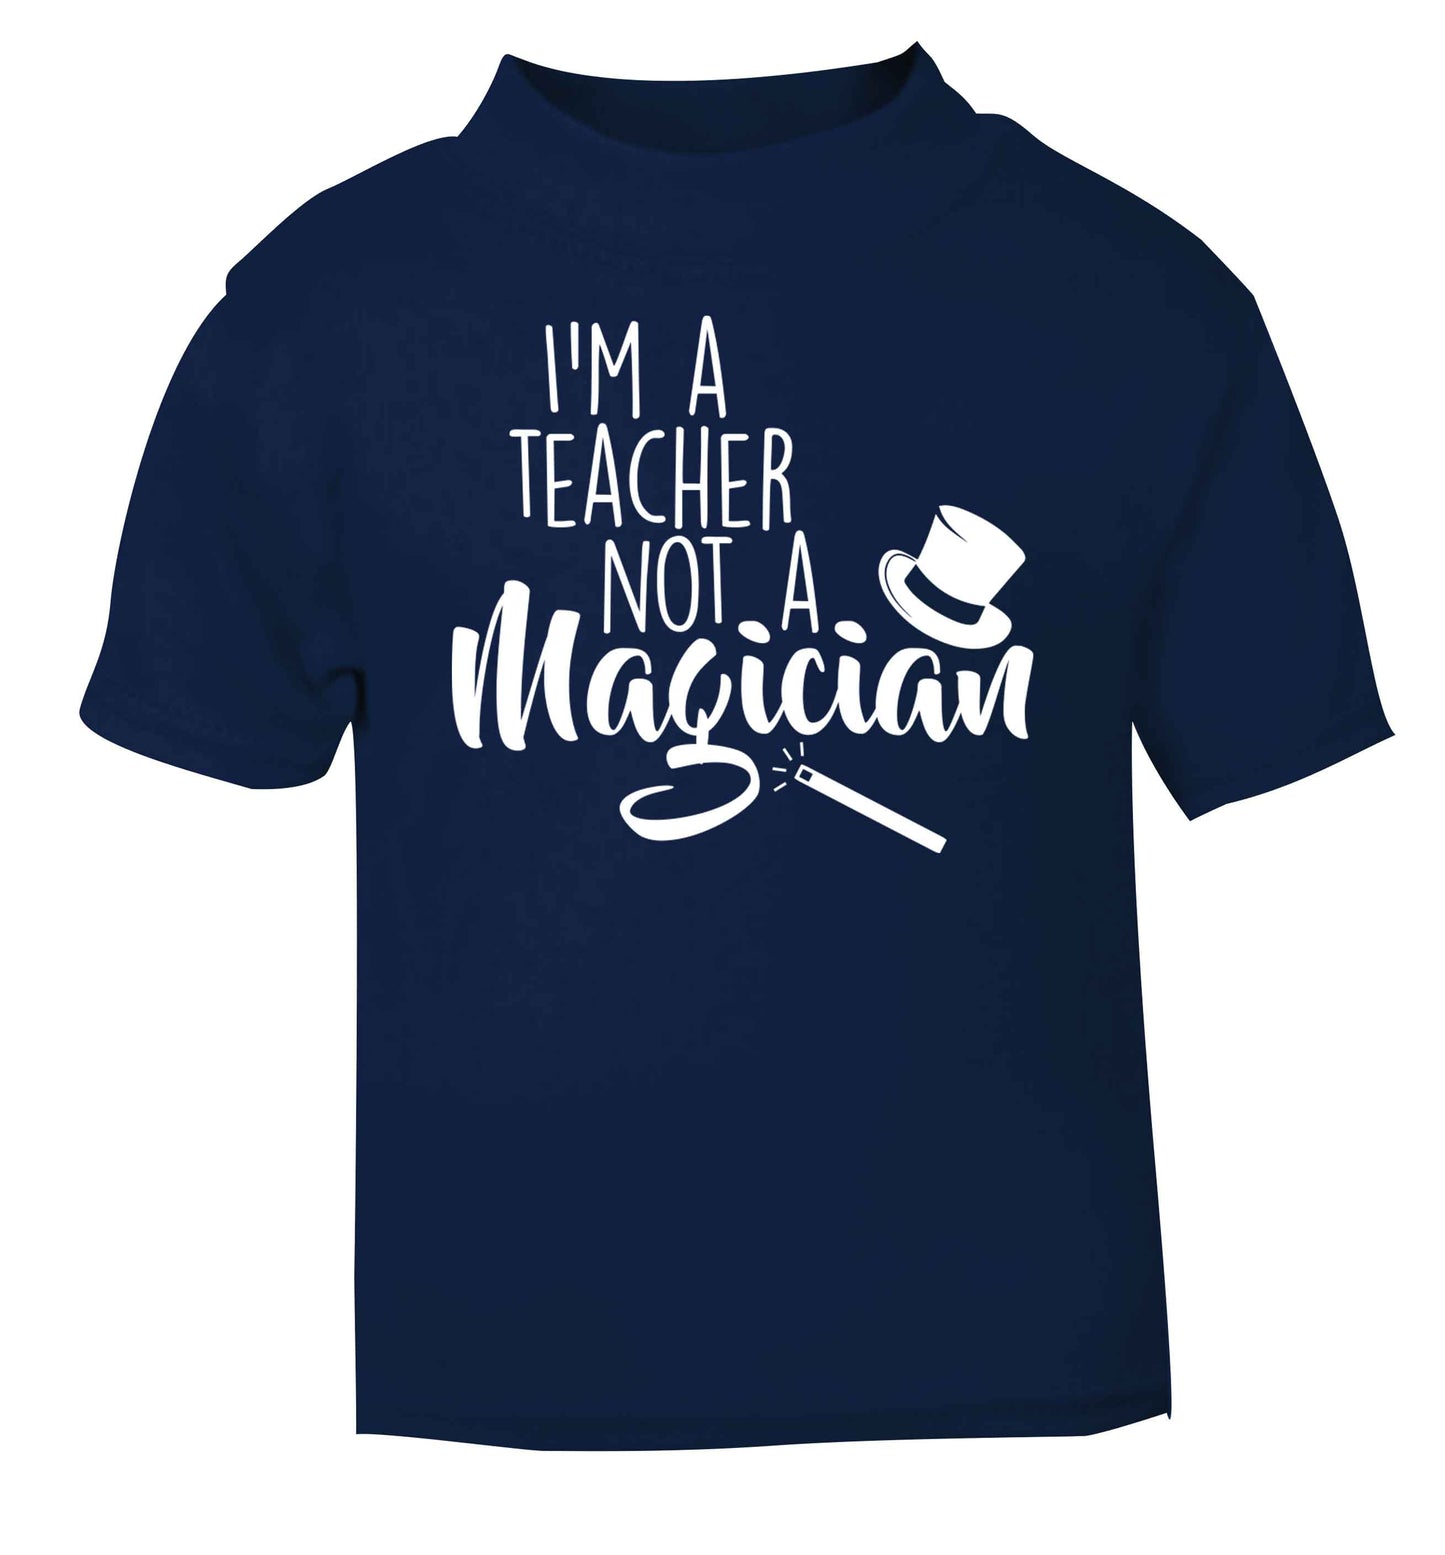 I'm a teacher not a magician navy baby toddler Tshirt 2 Years